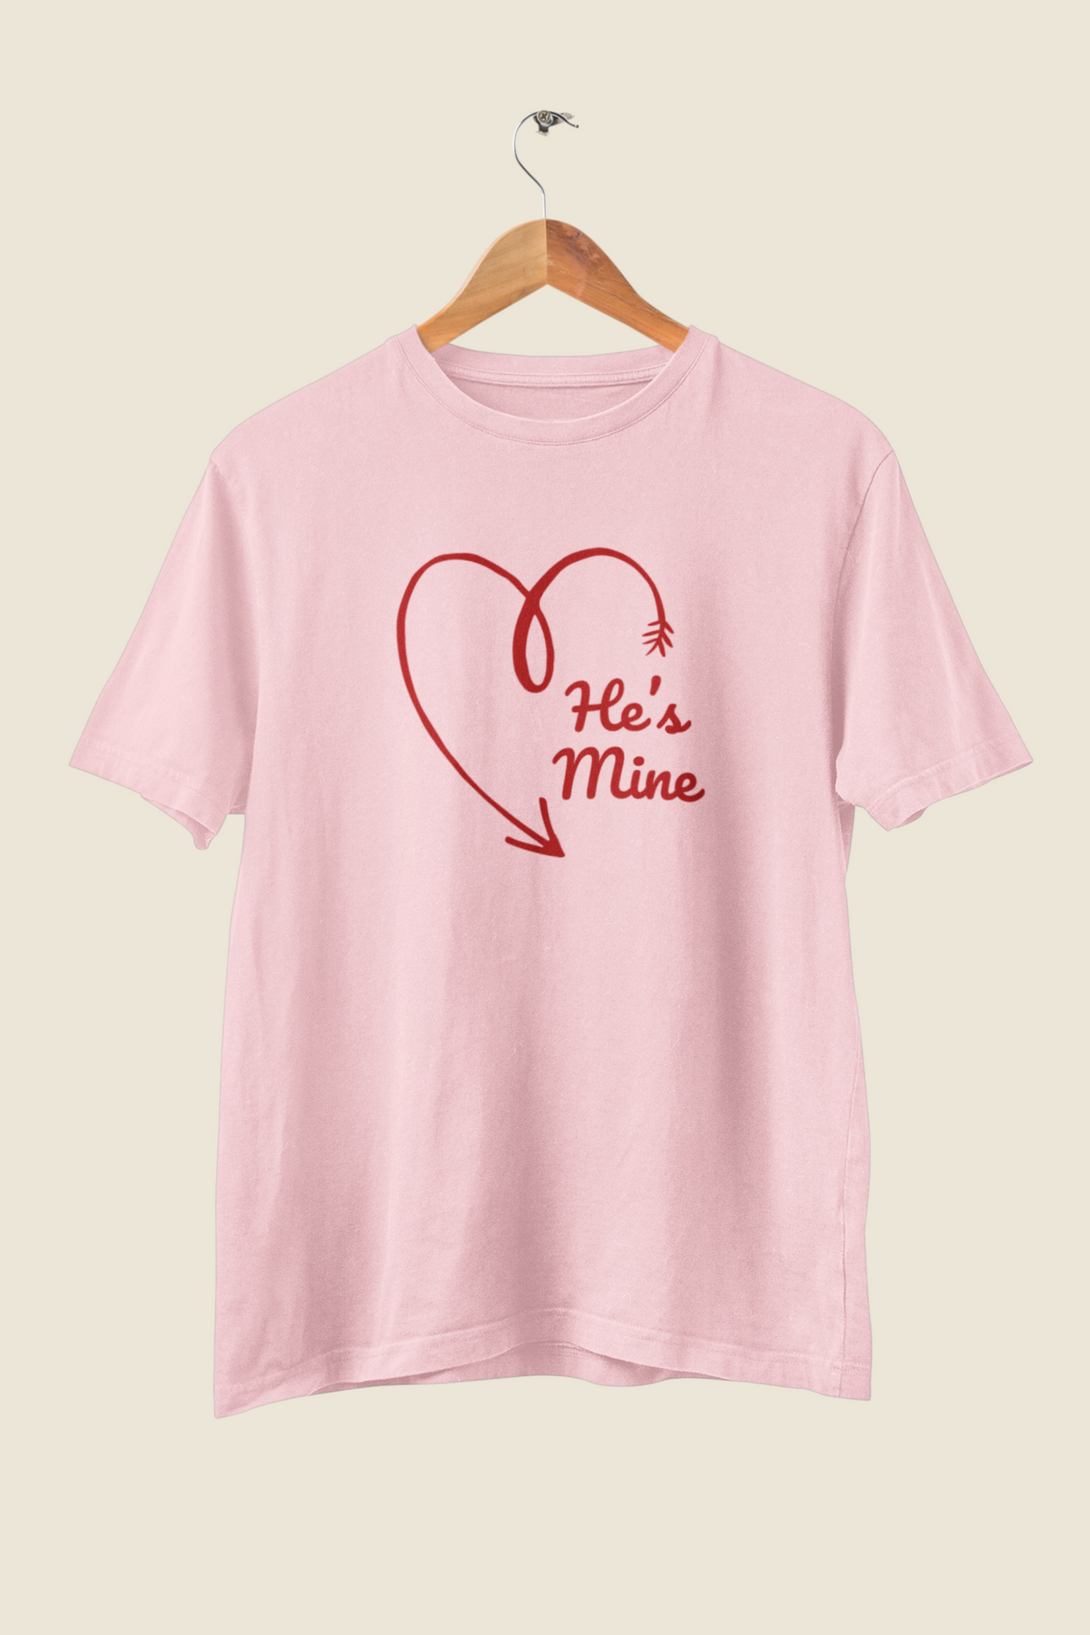 Mine Couple T Shirt - WowWaves - 6